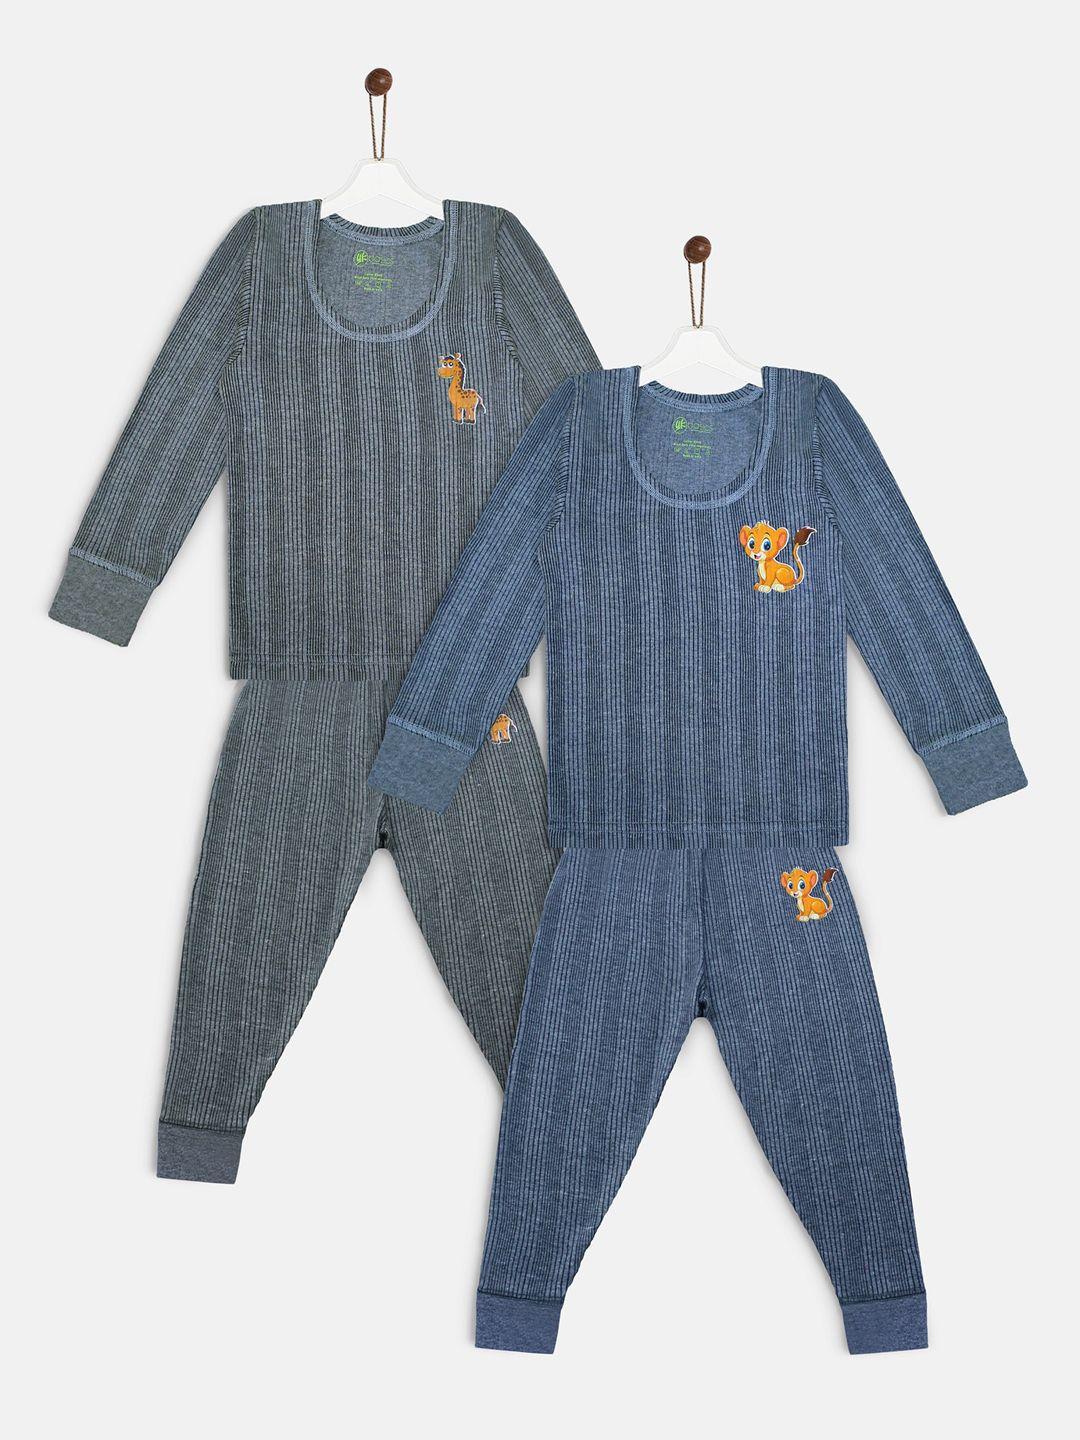 yk basics kids pack of 2 grey & blue striped thermal set